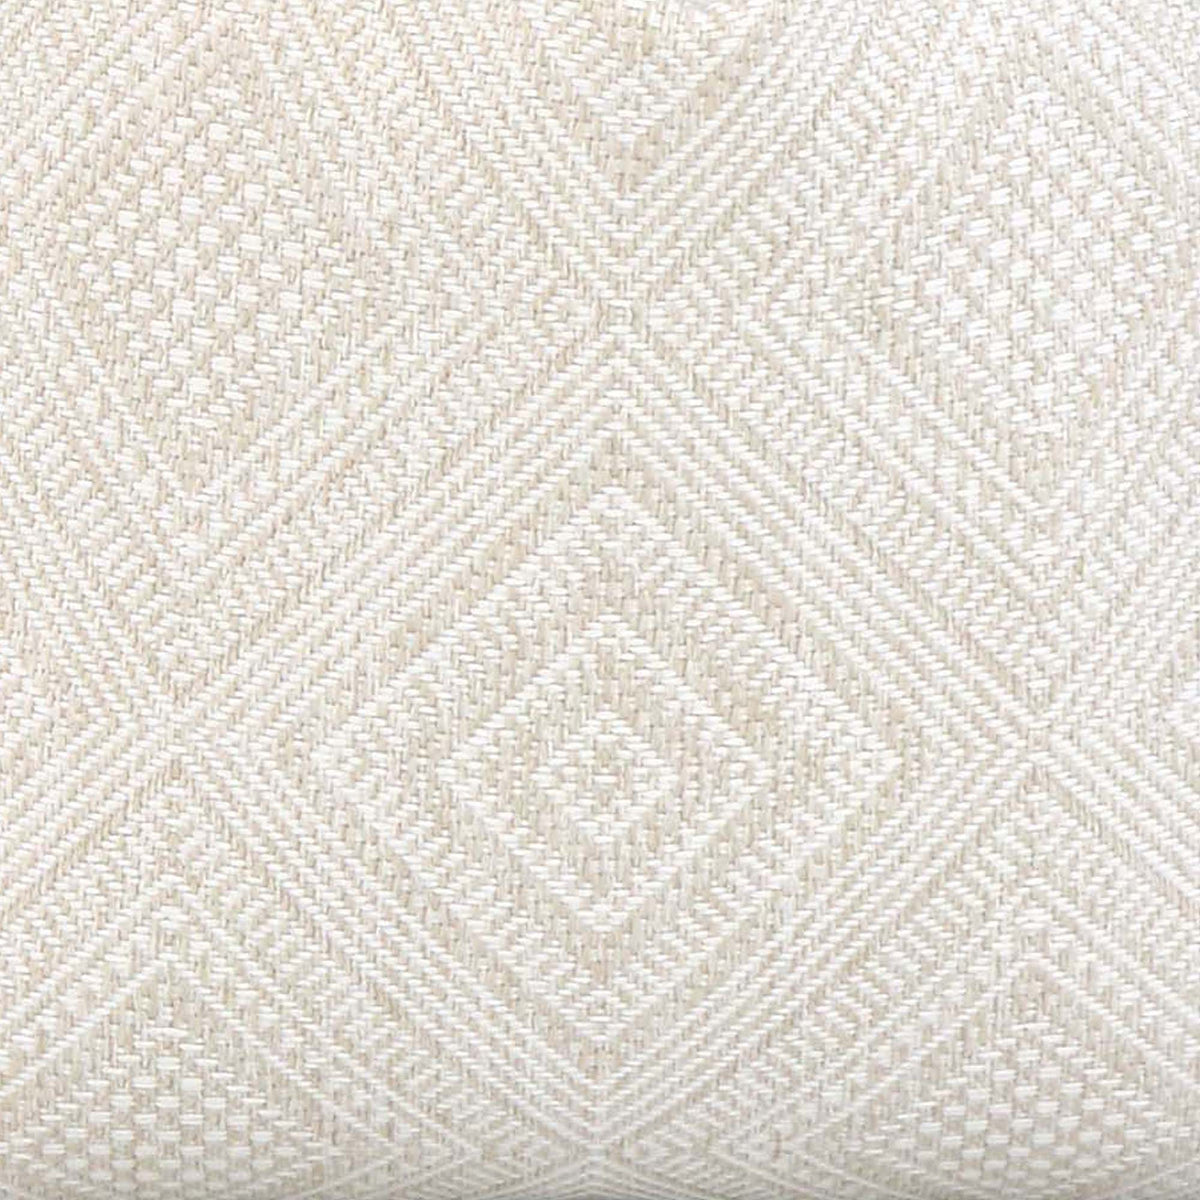 Antigua Weave Alabaster / 4x4 inch Fabric Swatch